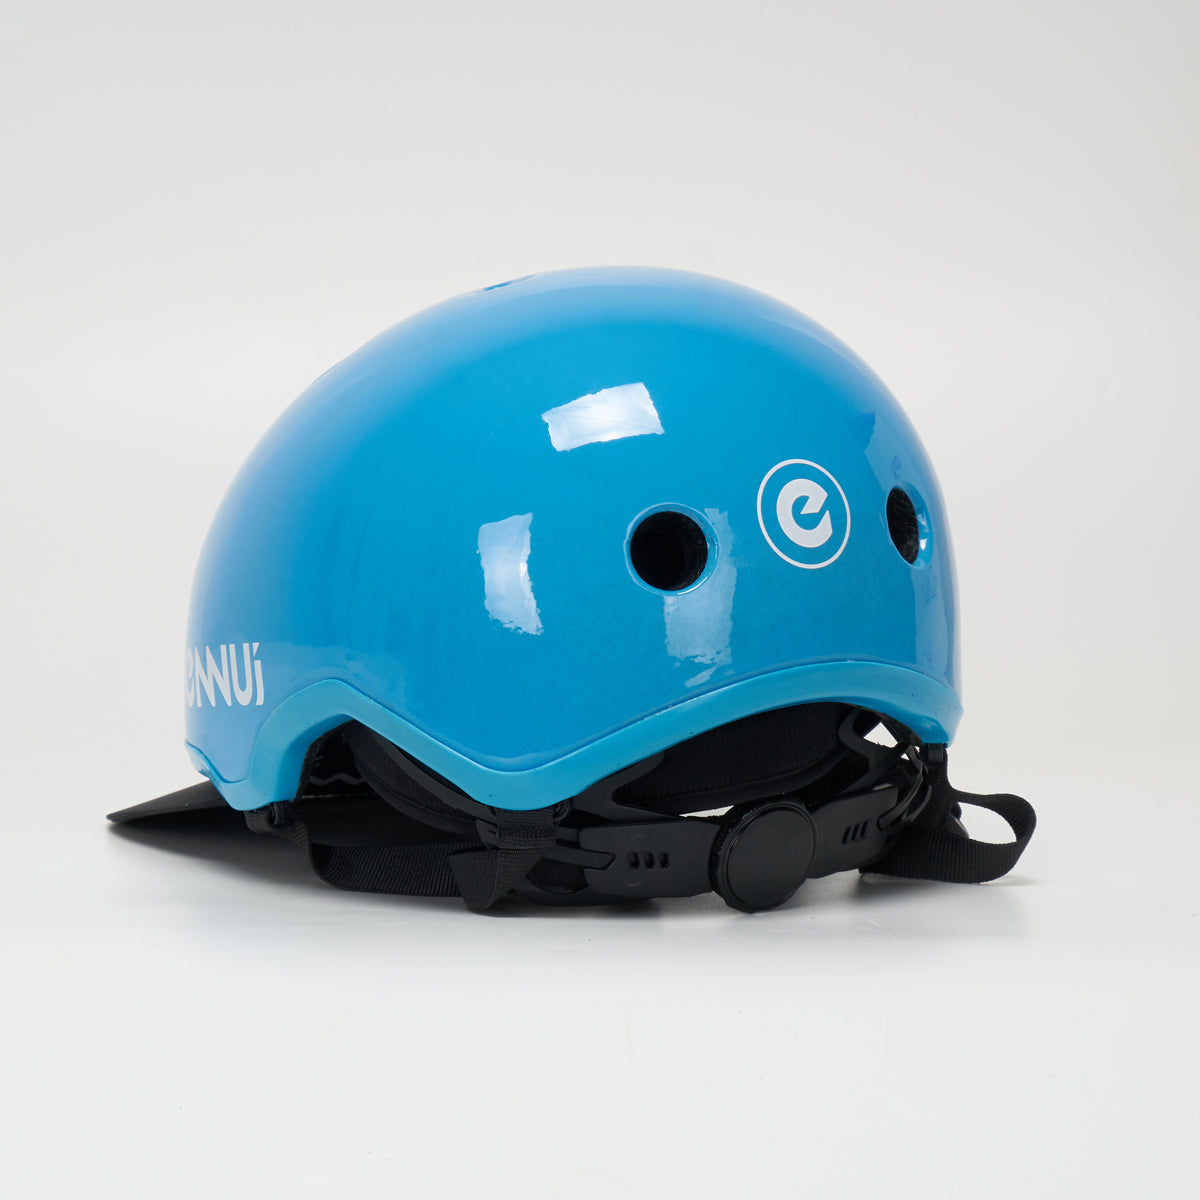 Ennui Elite Helmet - Blue